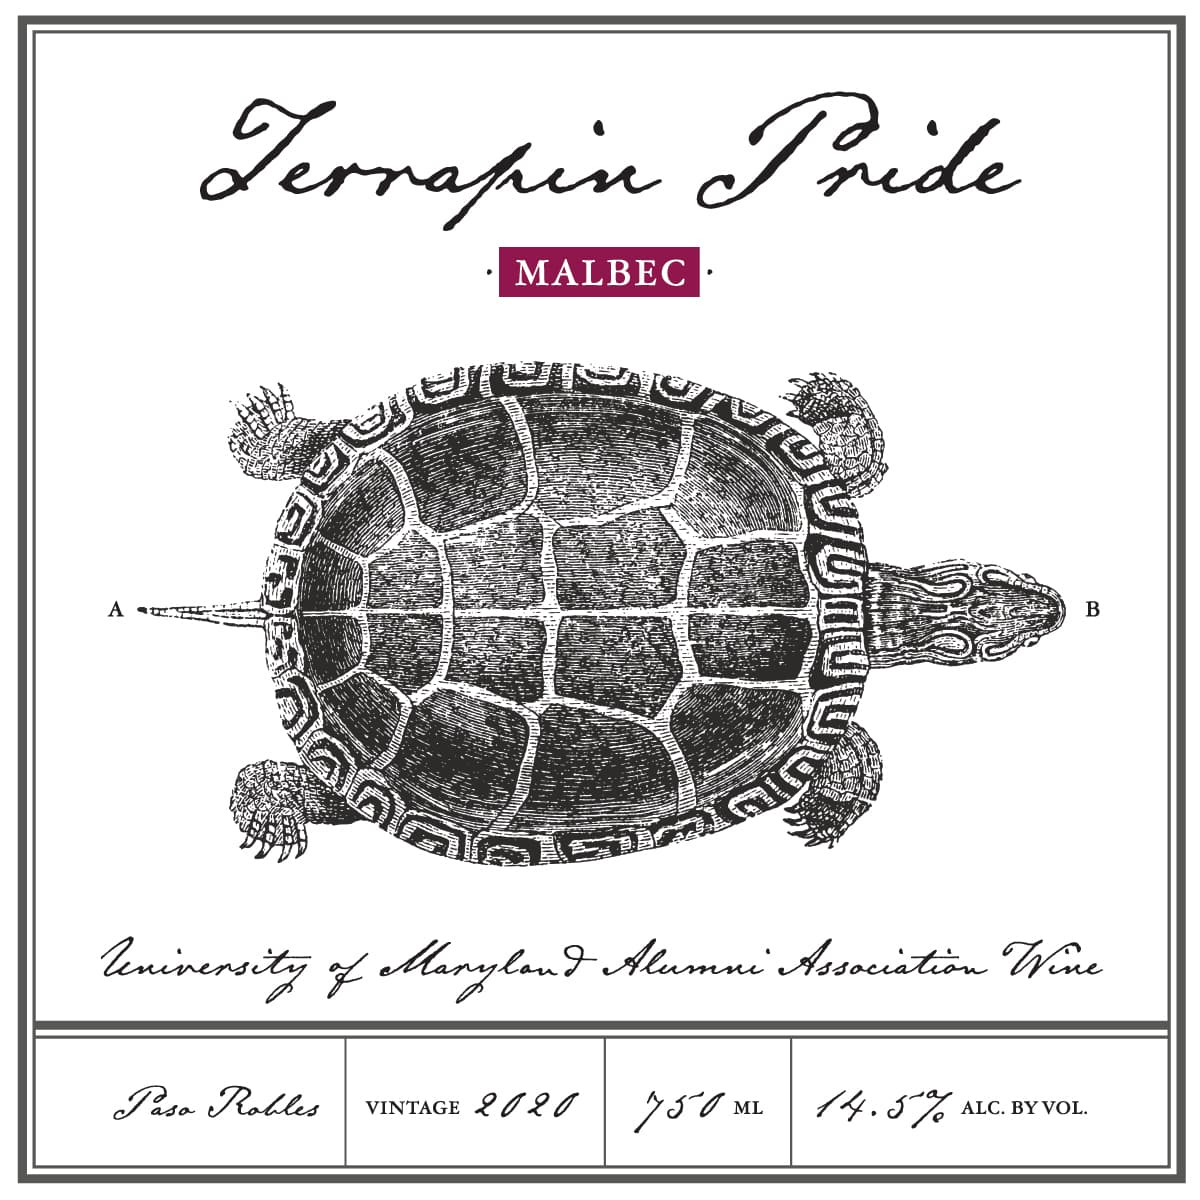 Terrapin Pride Malbec | University of Maryland Alumni Association Wine | Paso Robles | Vintage 2020 | 750 ML | 14.5% Alc. By Vol.